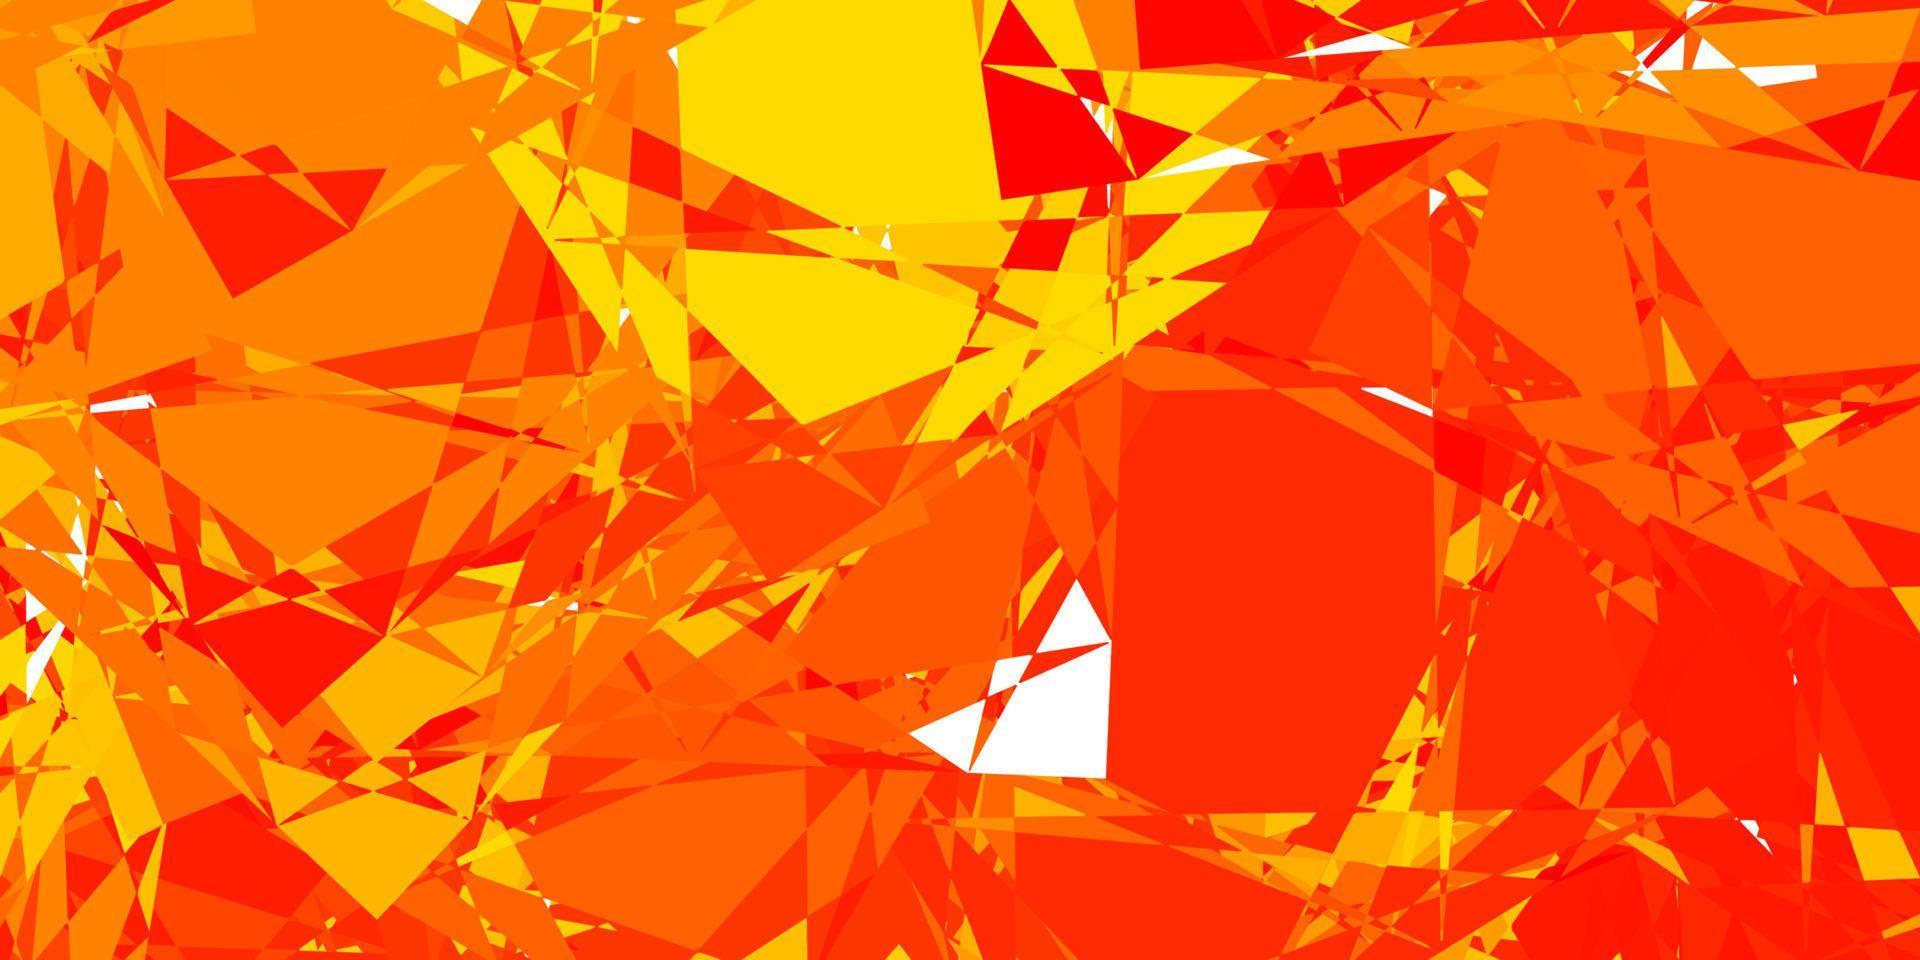 pano de fundo vector laranja claro com triângulos, linhas.